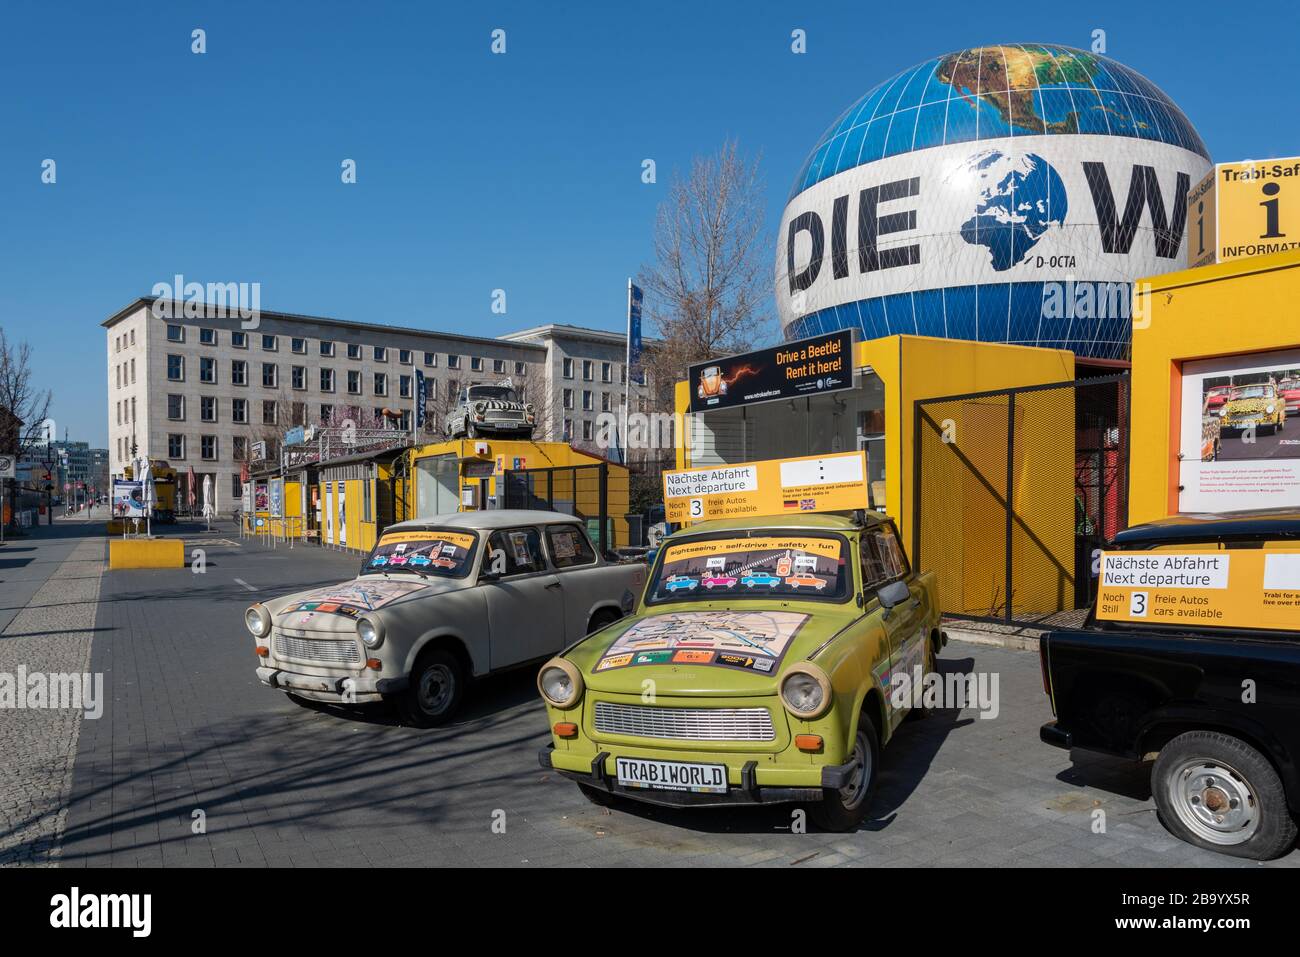 "Trabiworld"-Trabantwagen mieten Touristenattraktion in Berlin geschlossen während Coronavirus-Sperre Stockfoto